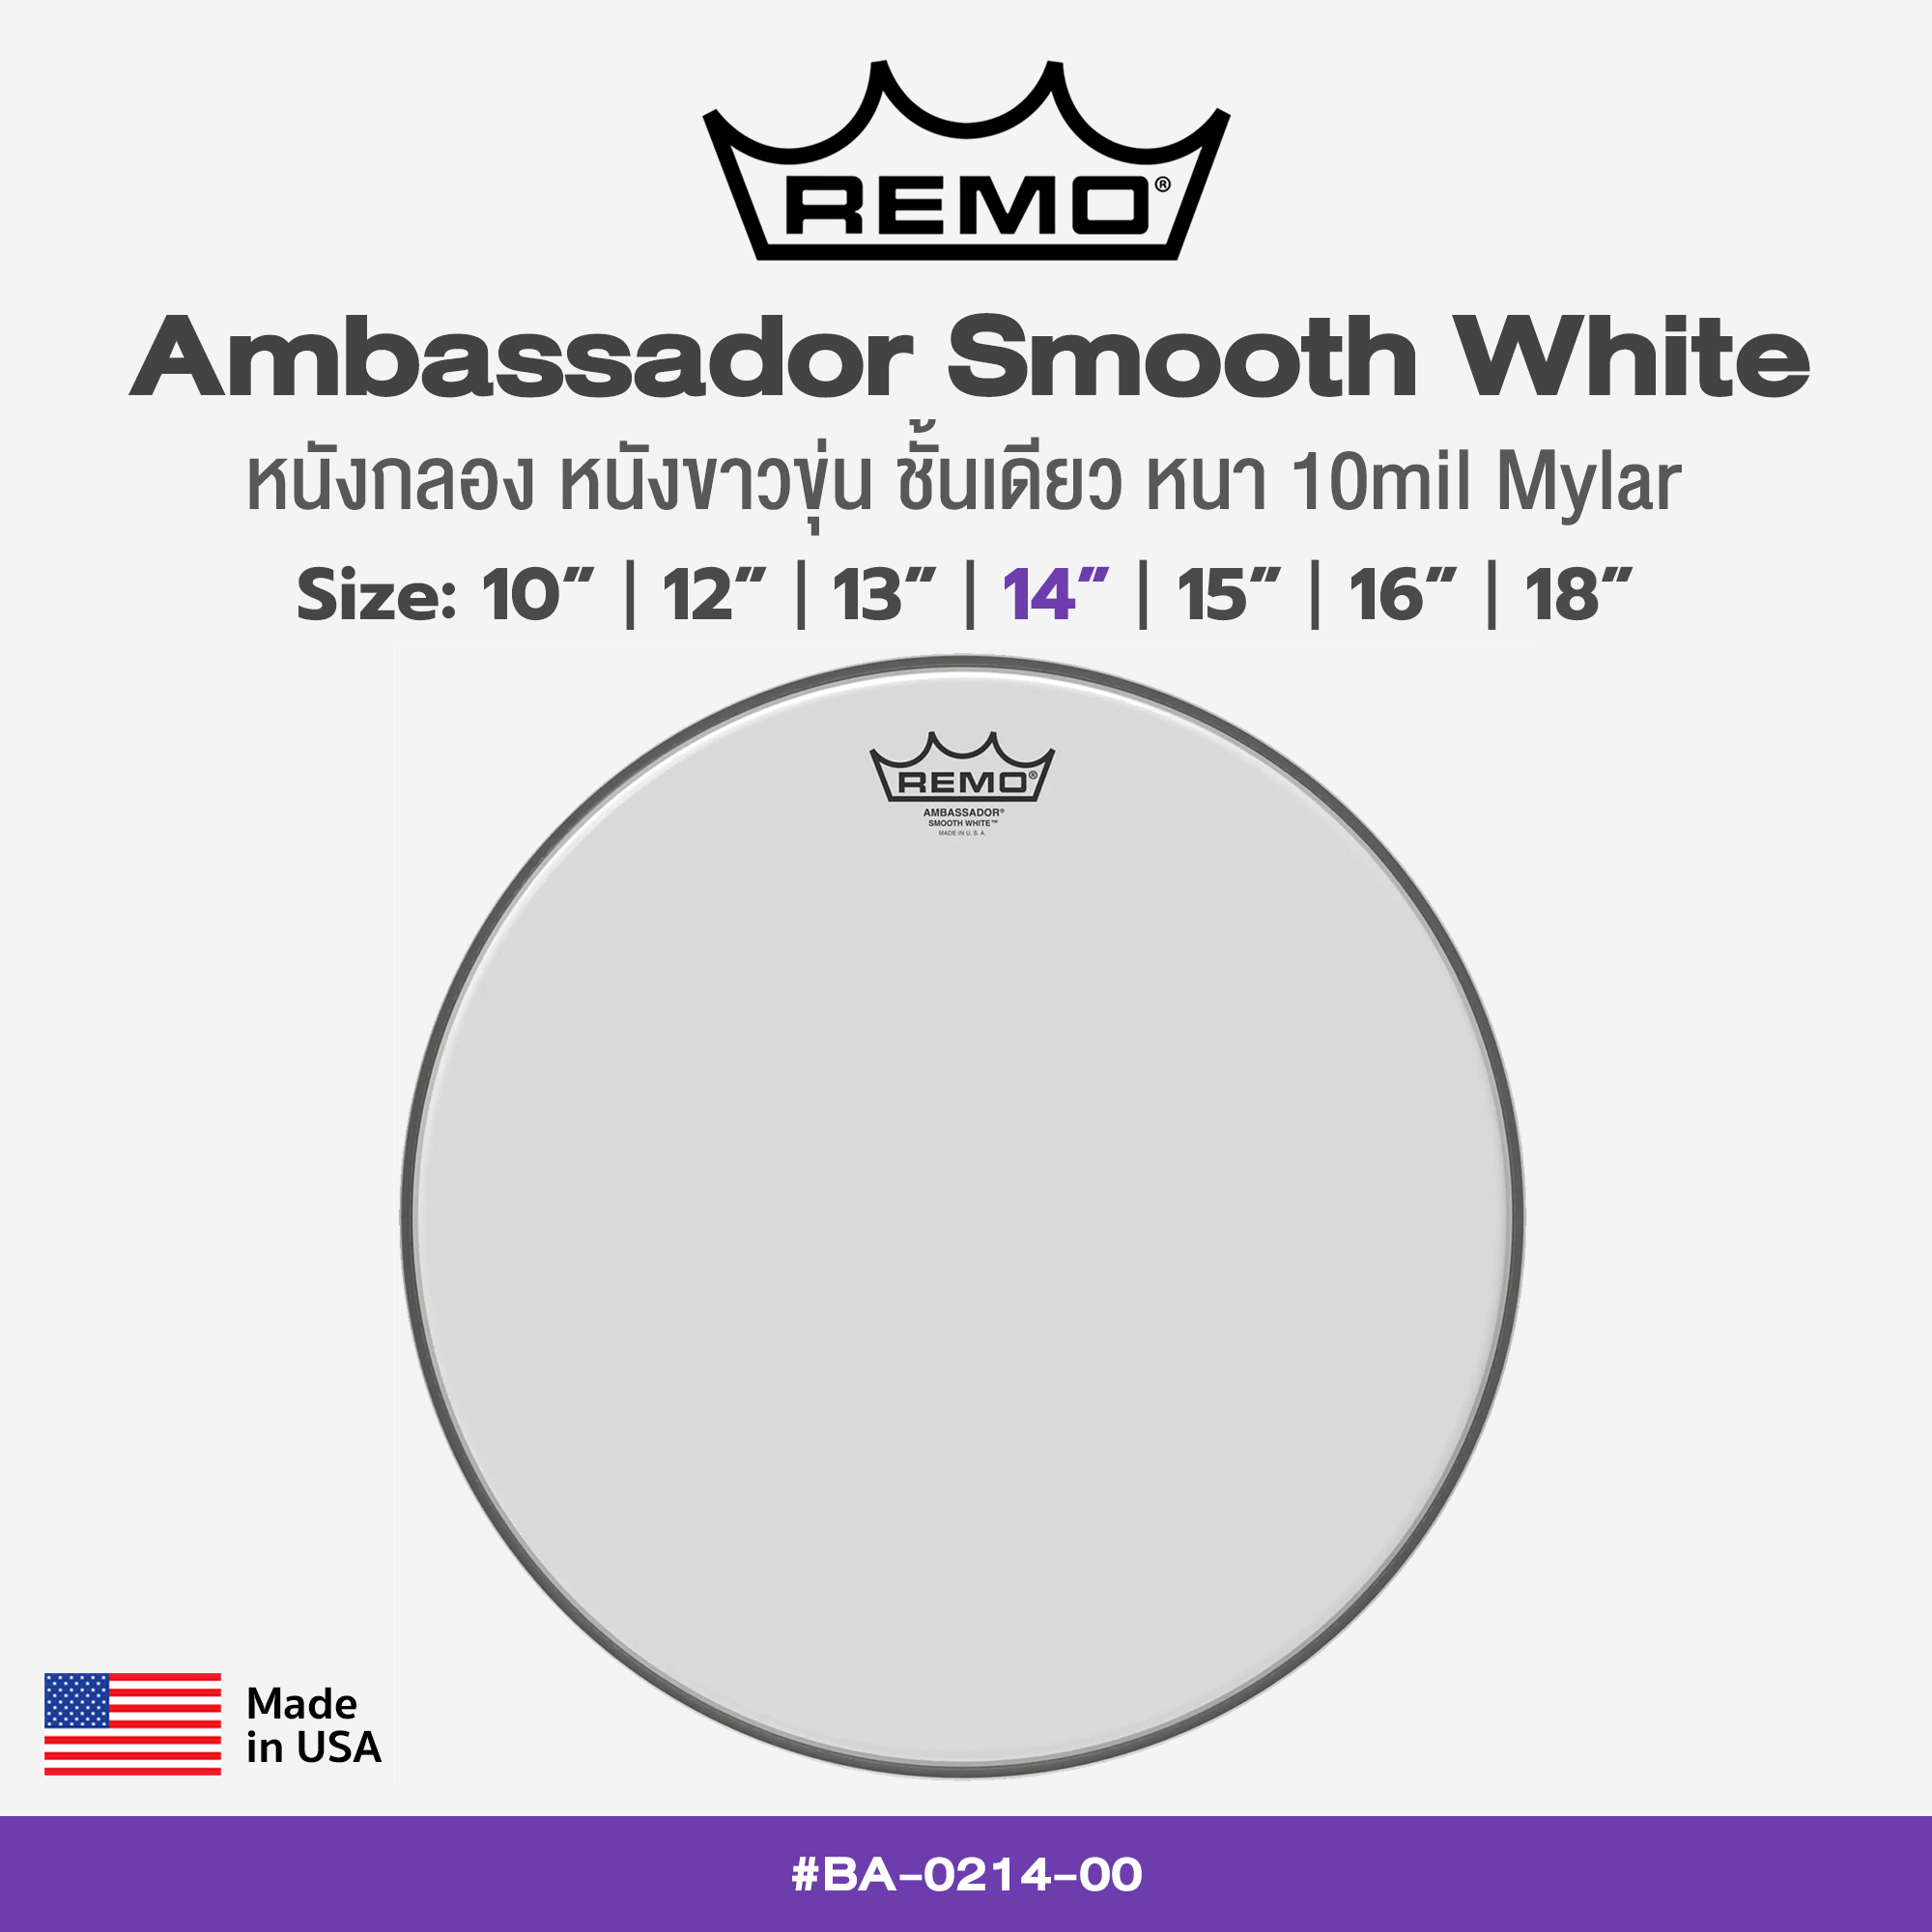 Remo Ambassador Smooth White